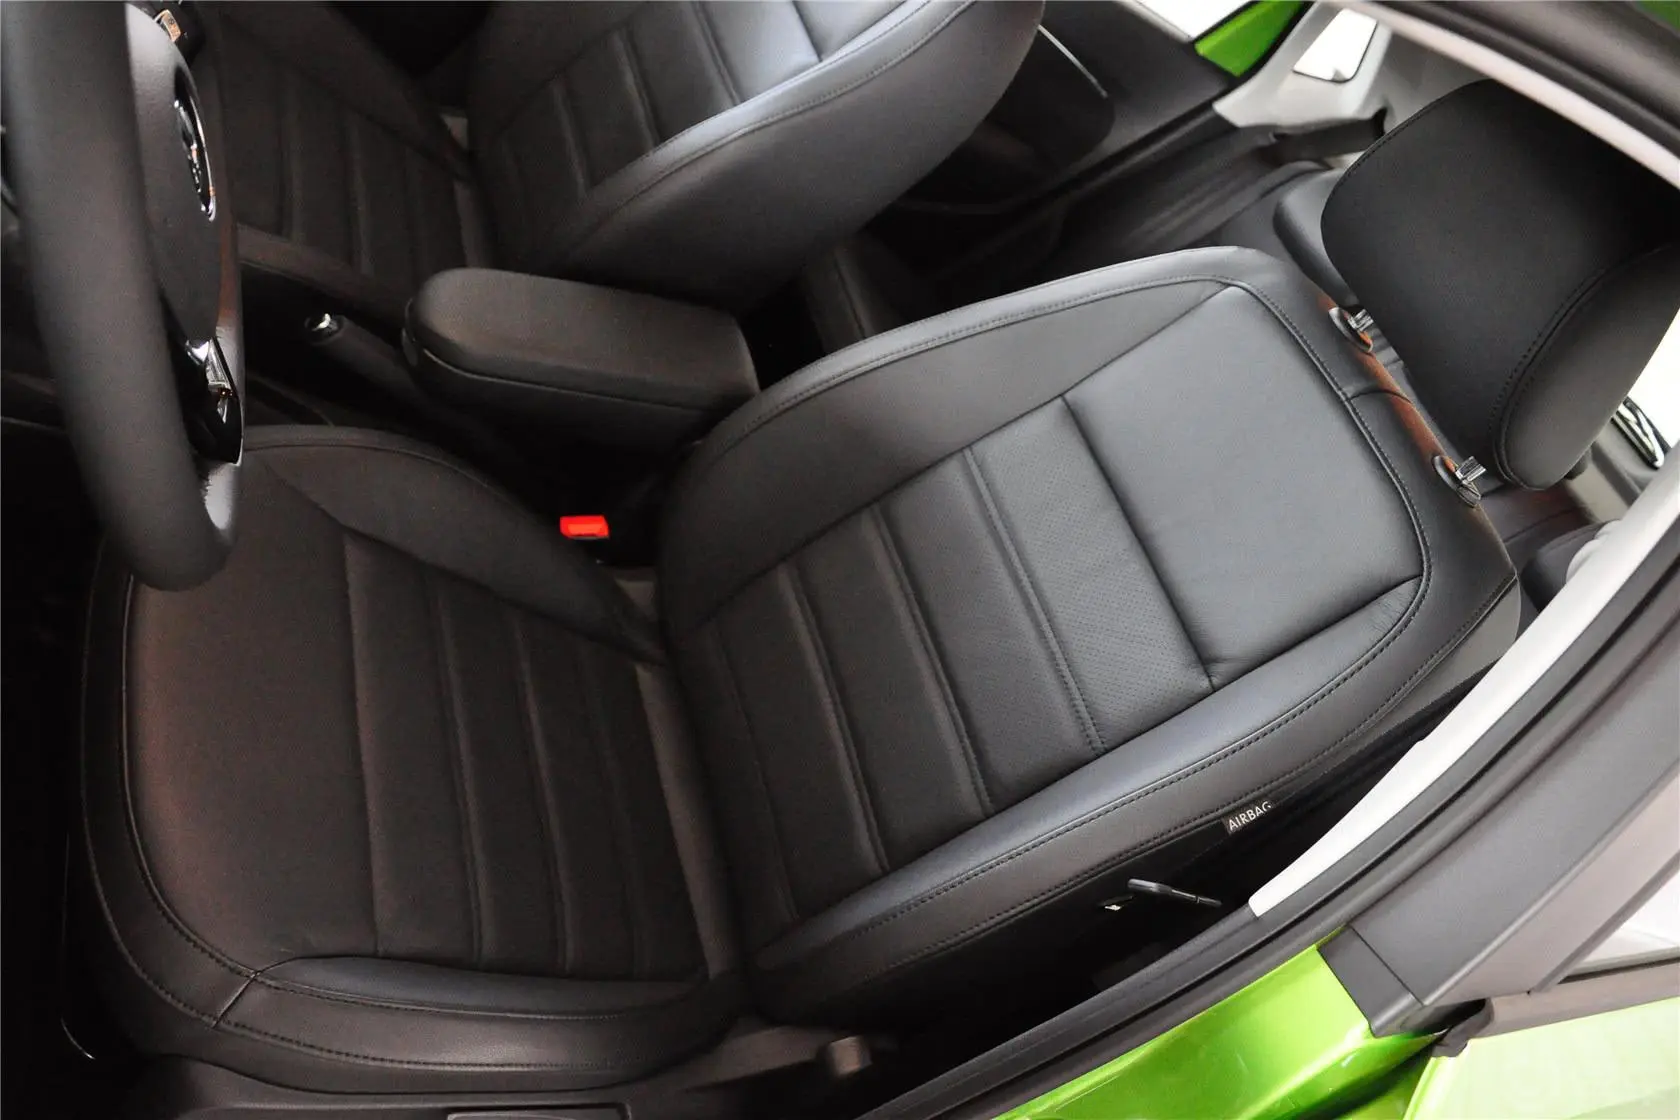 Polo1.6L 自动 豪华版驾驶员座椅